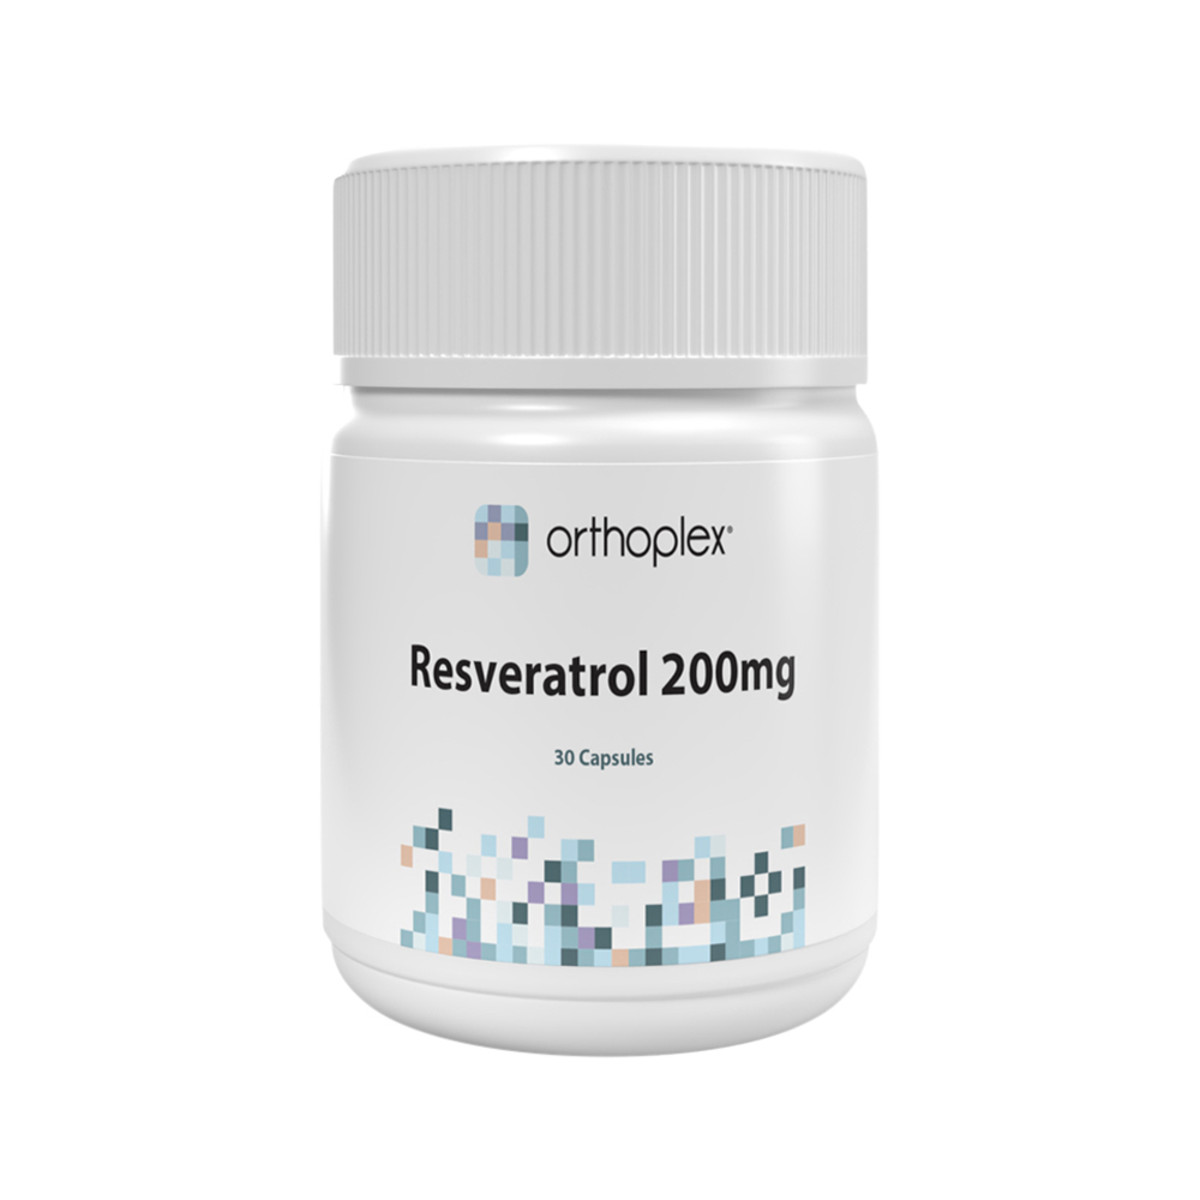 ORTHOPLEX WHITE - Label Resveratrol